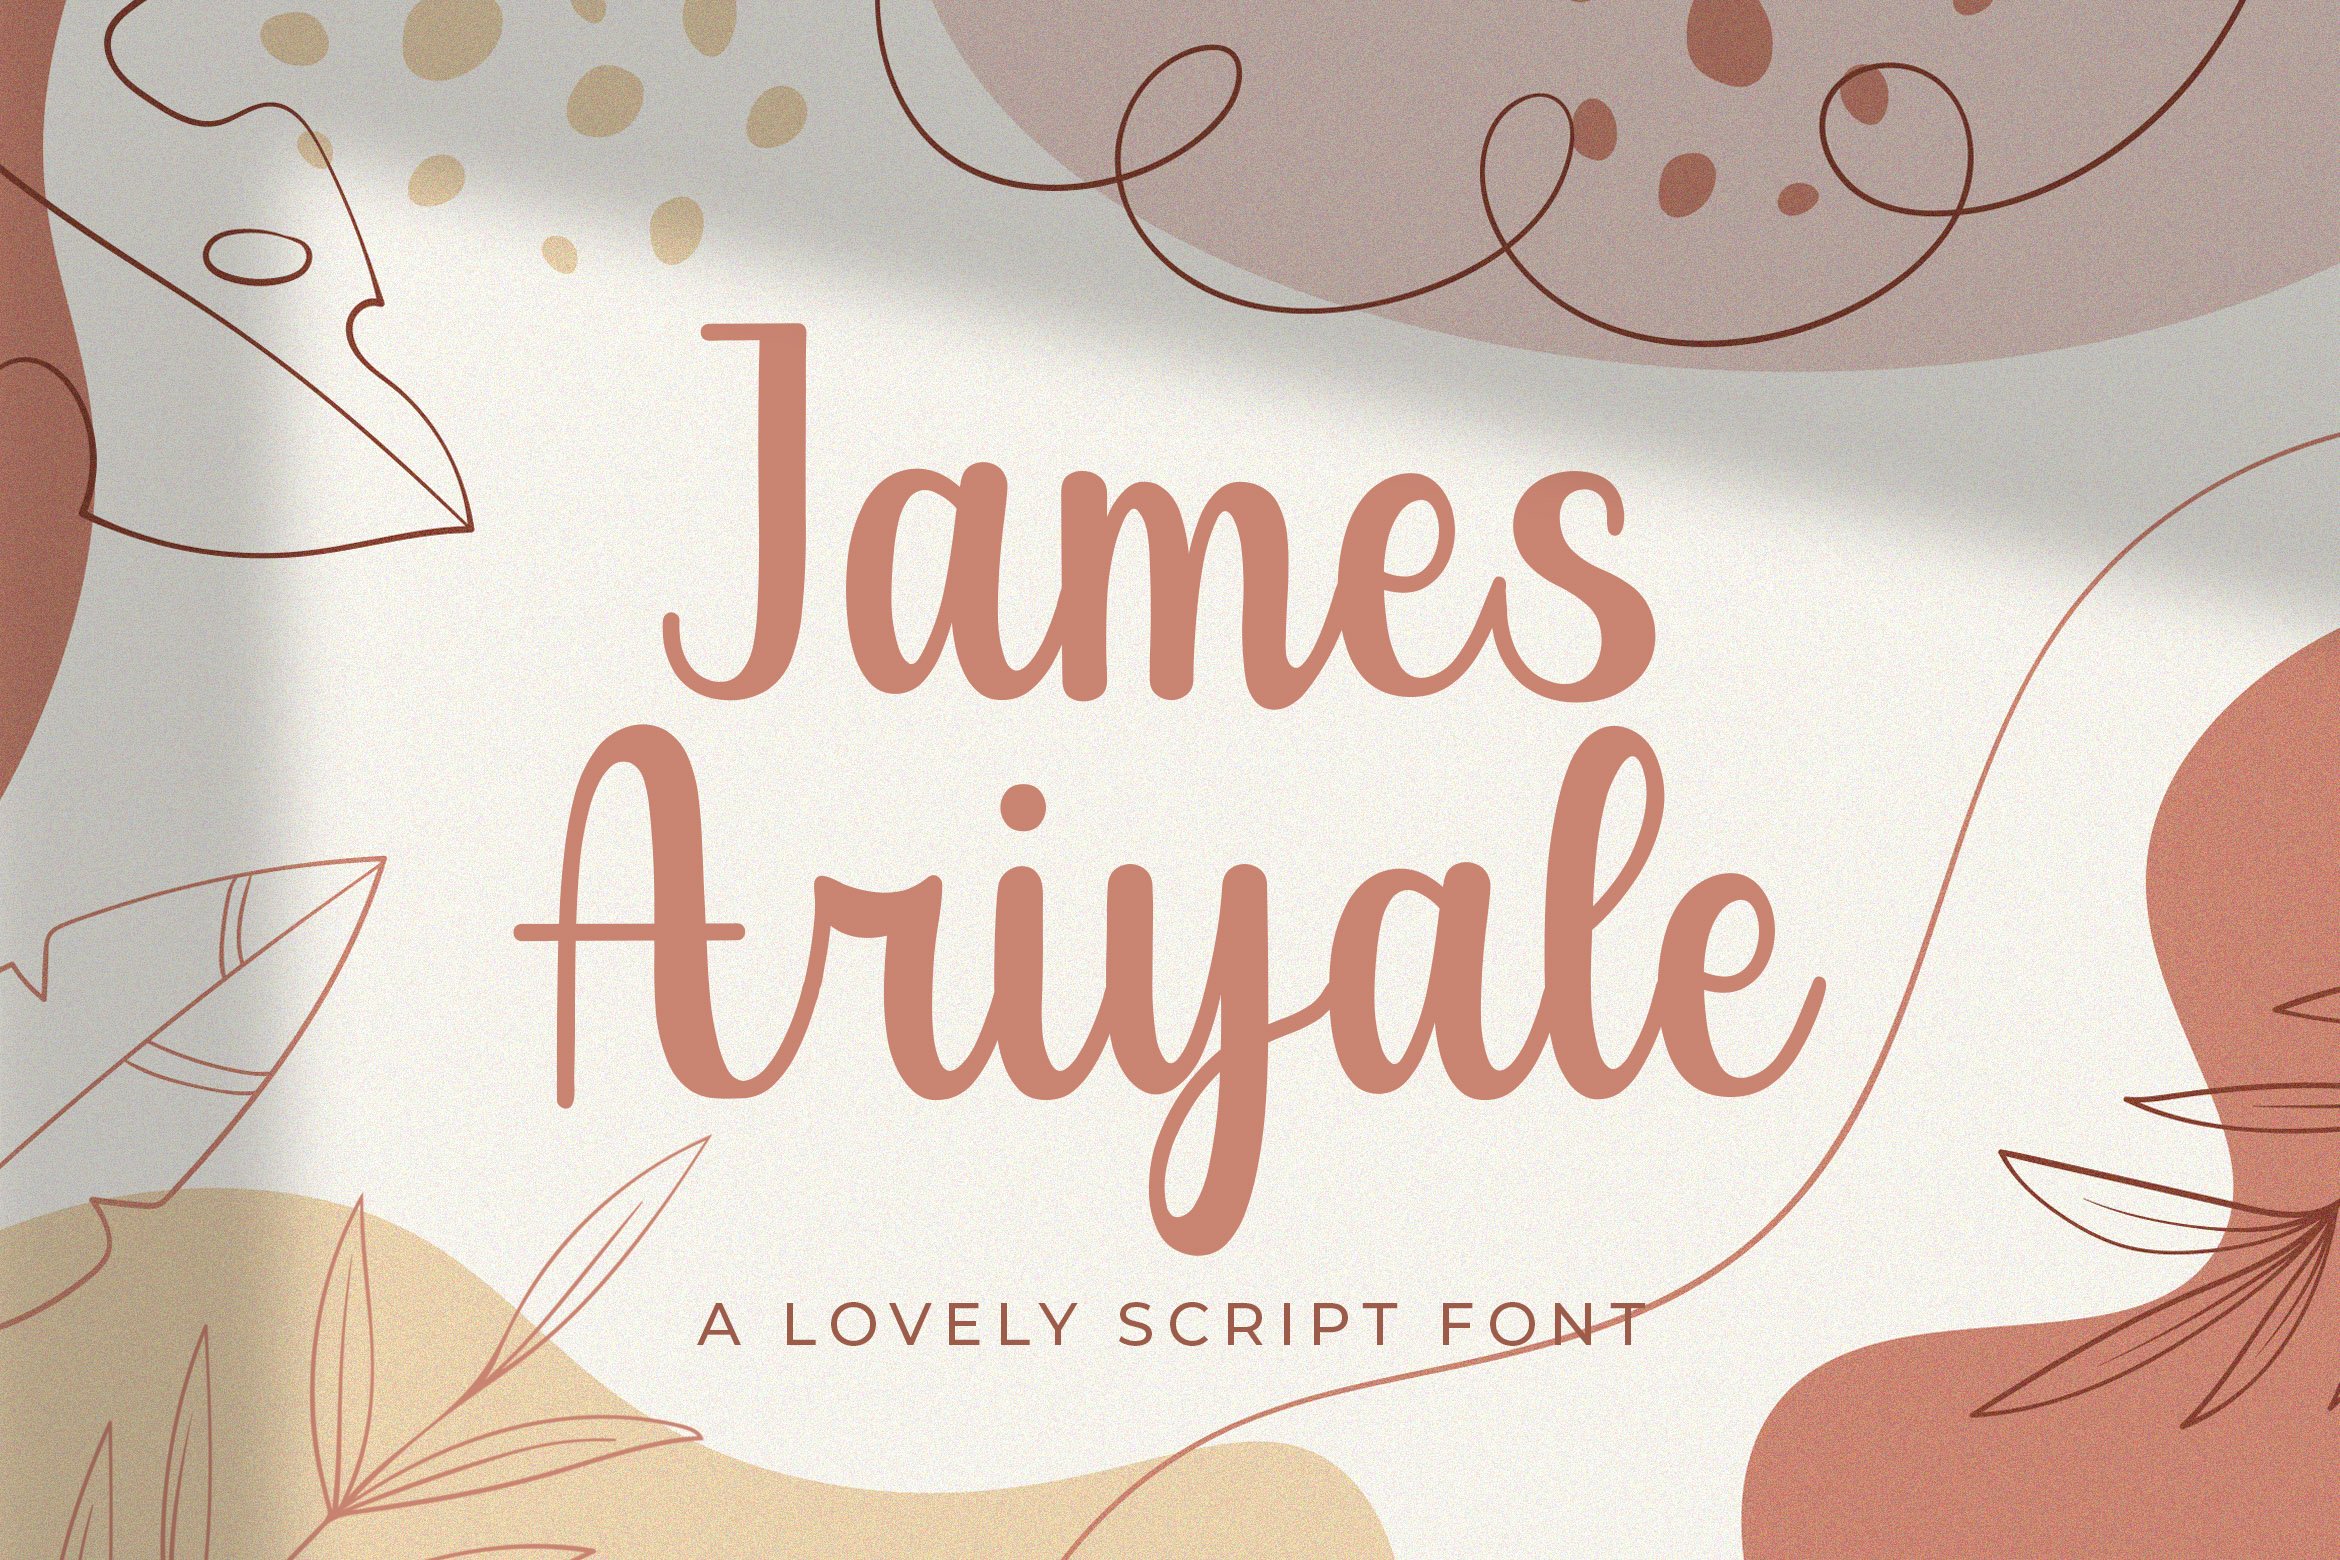 James Ariyale - Handwritten Font cover image.